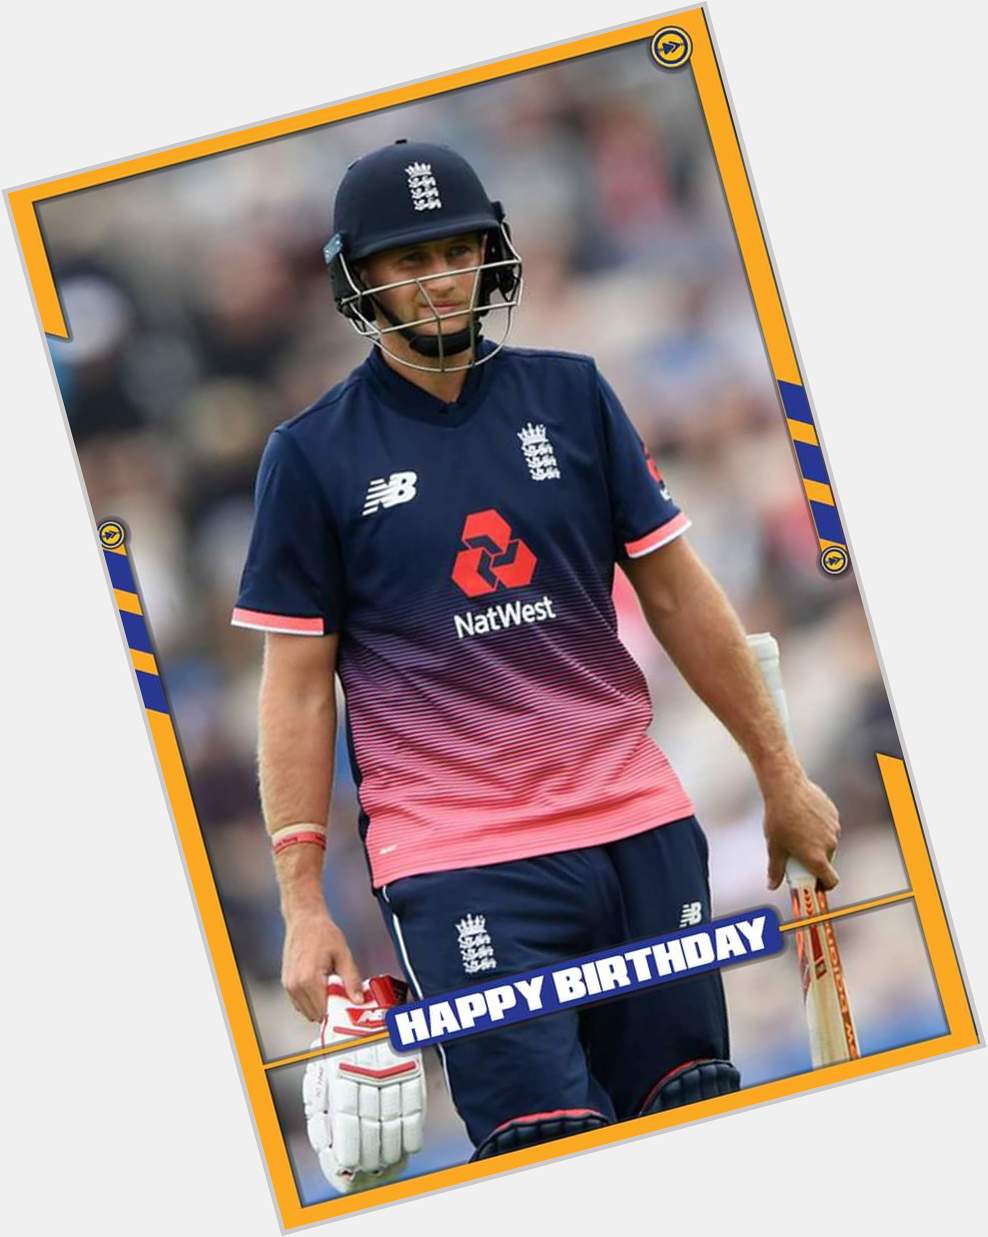 Happy birthday to the England Cricket team skipper, Joe Root!!!   